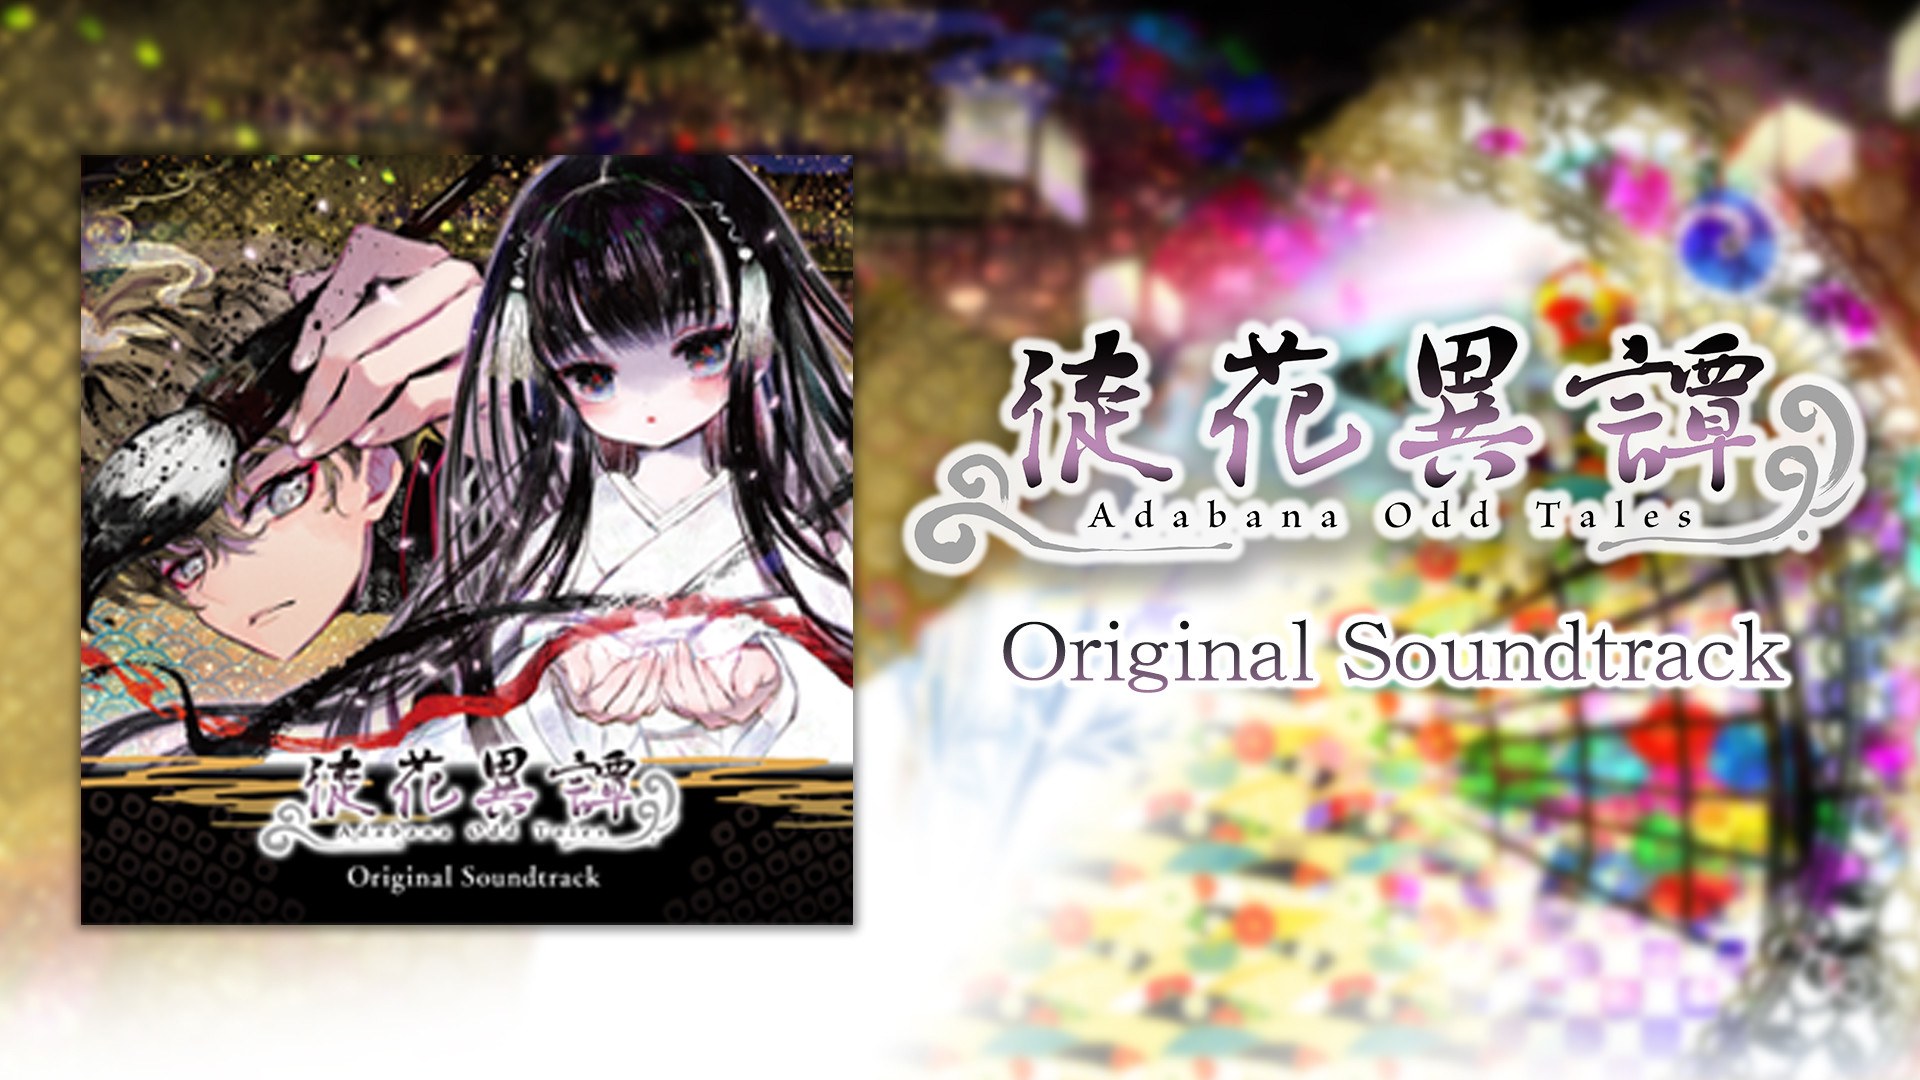 Adabana Odd Tales Original Soundtrack Featured Screenshot #1